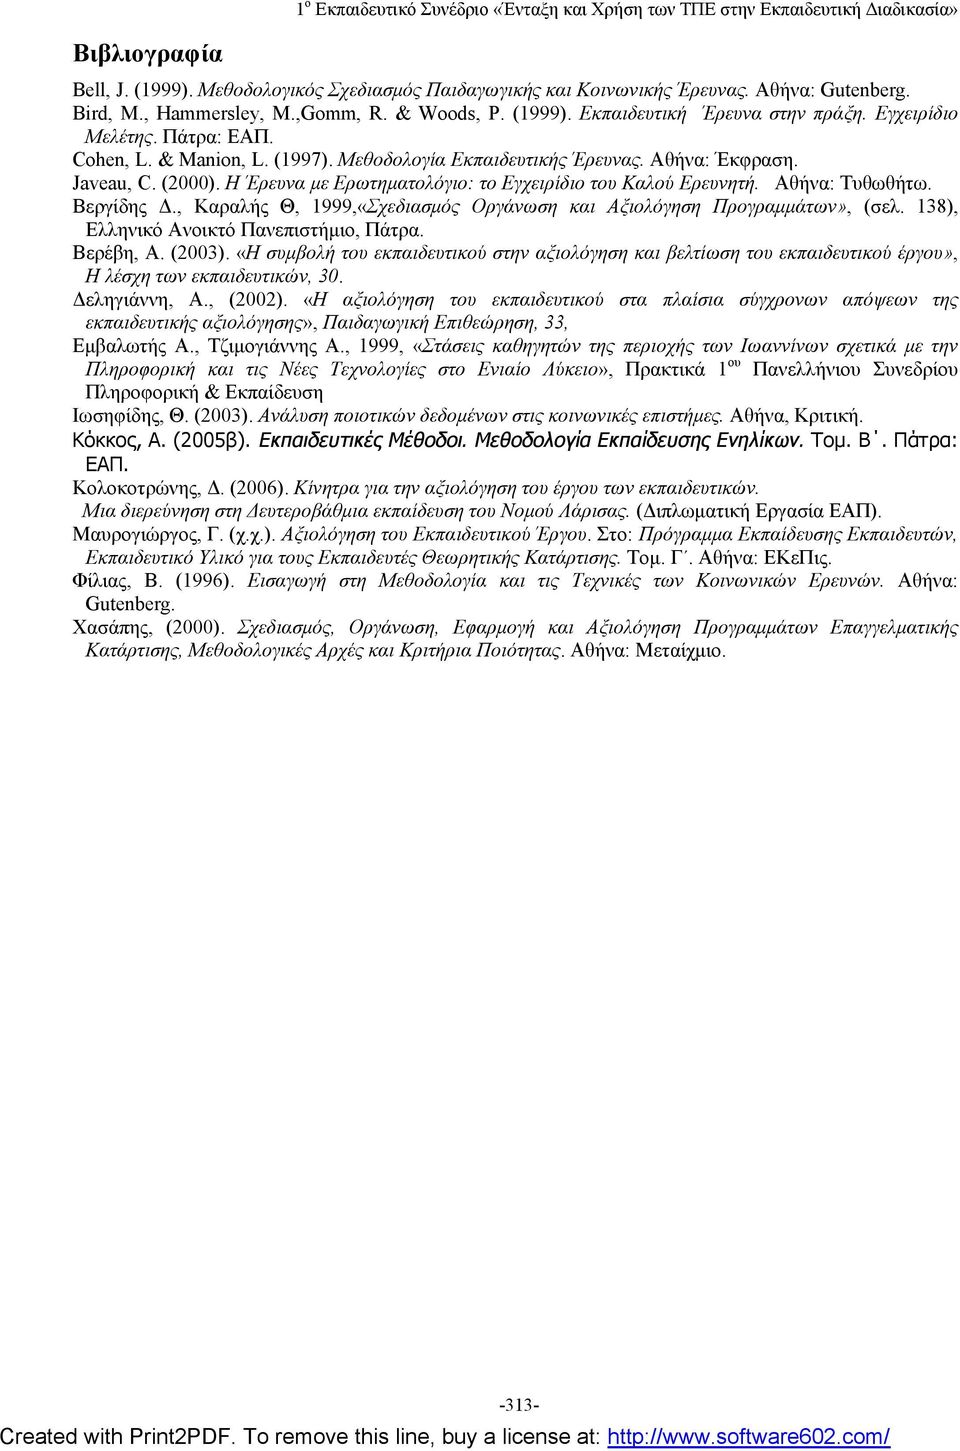 Javeau, C. (2000). Η Έρευνα με Ερωτηματολόγιο: το Εγχειρίδιο του Καλού Ερευνητή. Αθήνα: Τυθωθήτω. Βεργίδης Δ., Καραλής Θ, 1999,«Σχεδιασμός Οργάνωση και Αξιολόγηση Προγραμμάτων», (σελ.